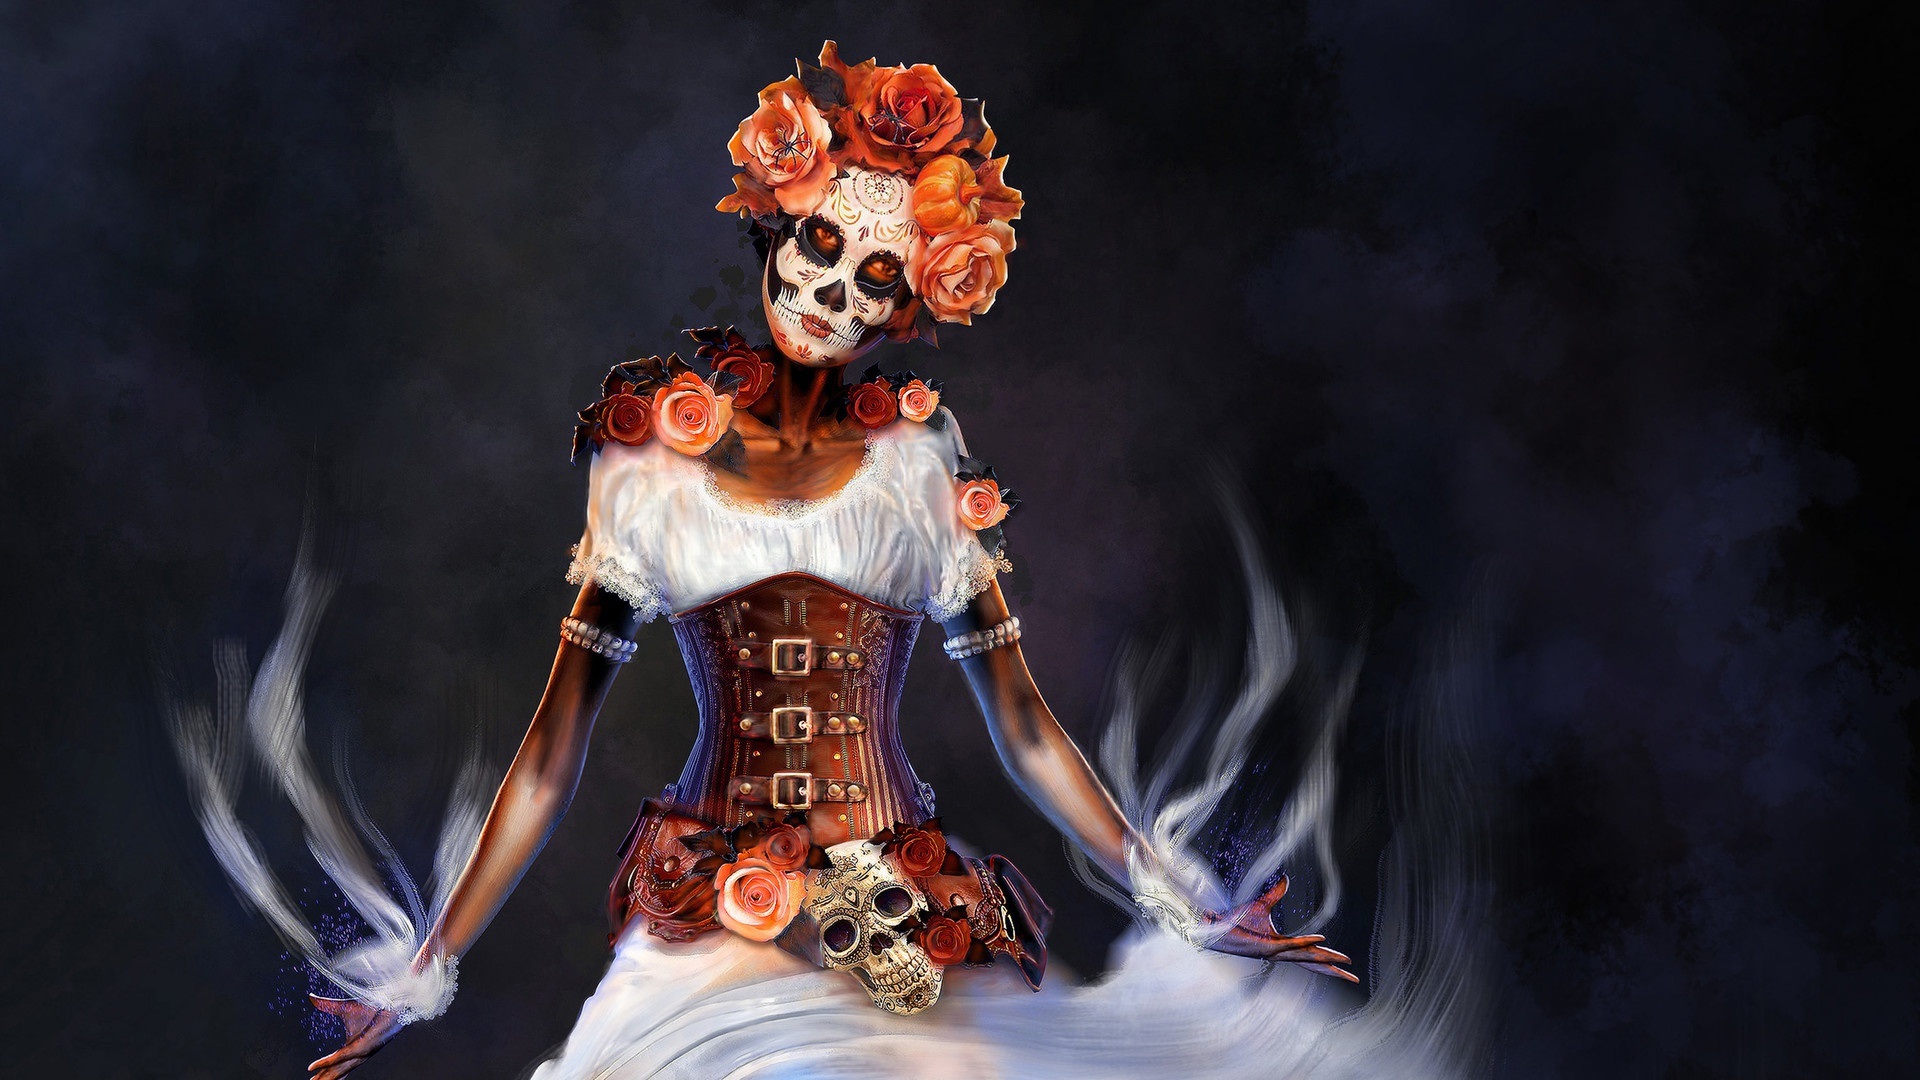 Steampunk Girl in "Day of the Dead" make-up by Iliya Klimov